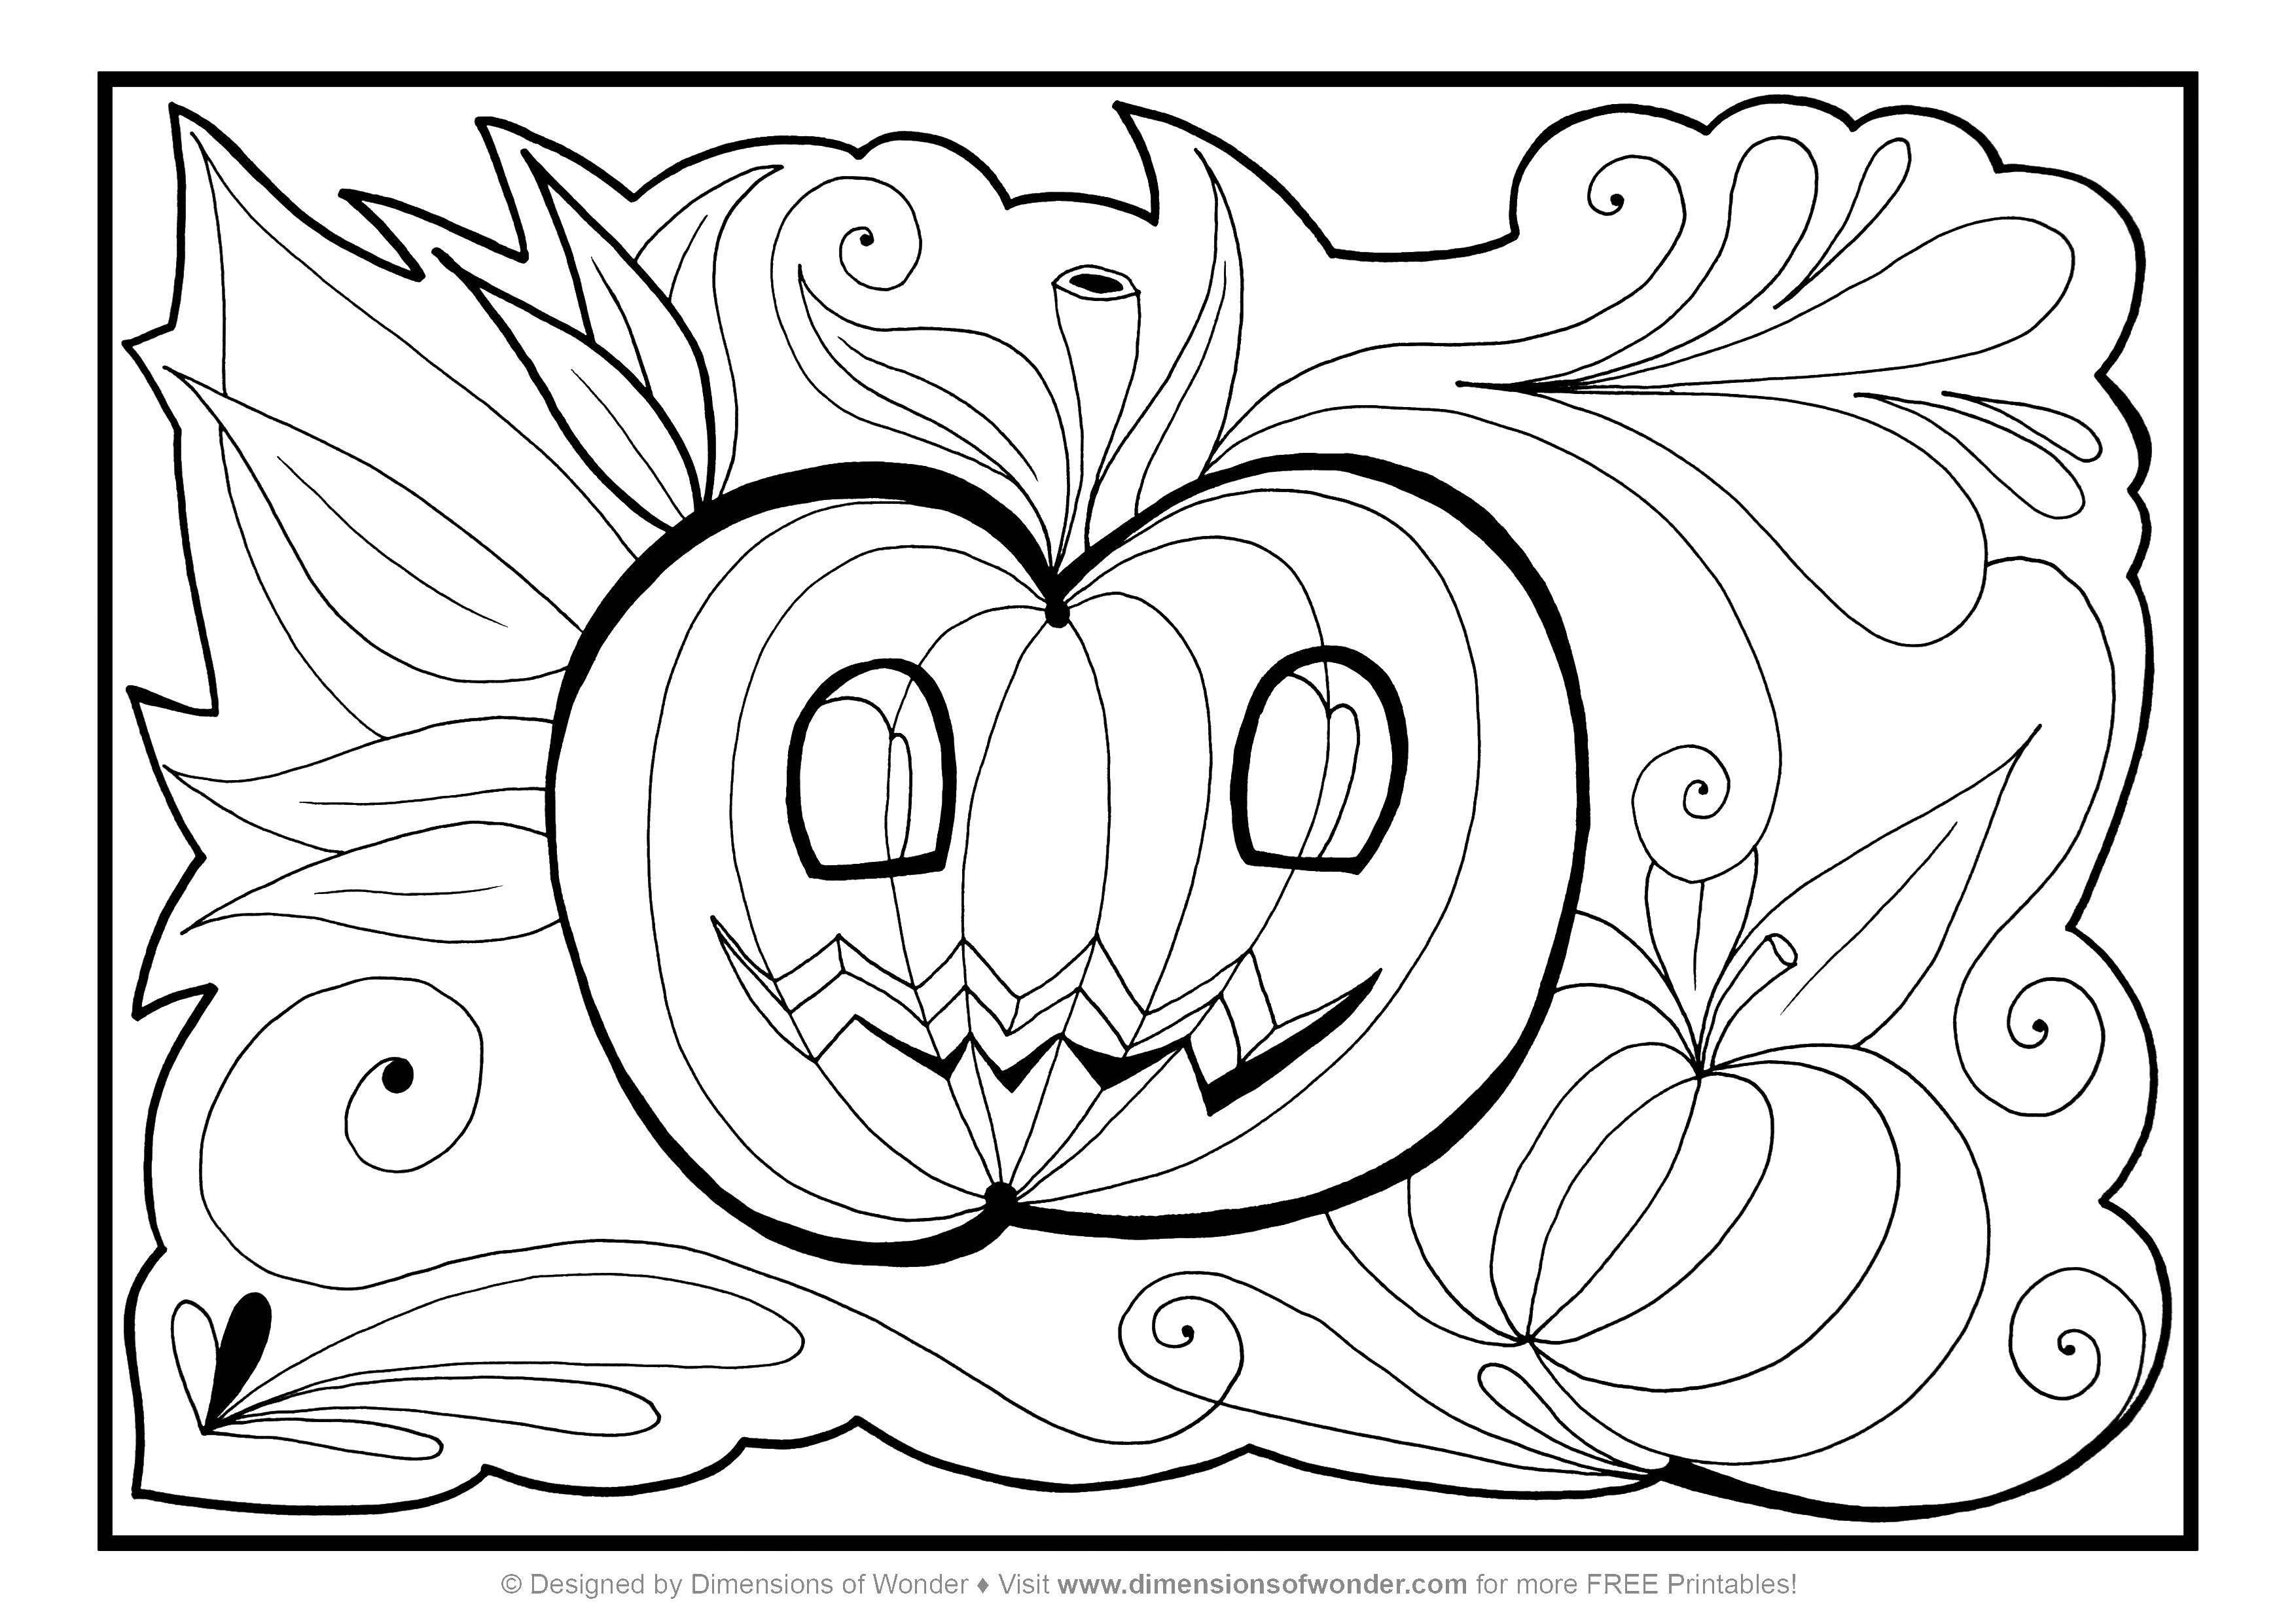 Coloring Drawing pumpkins. Category Halloween. Tags:  Halloween, pumpkin.